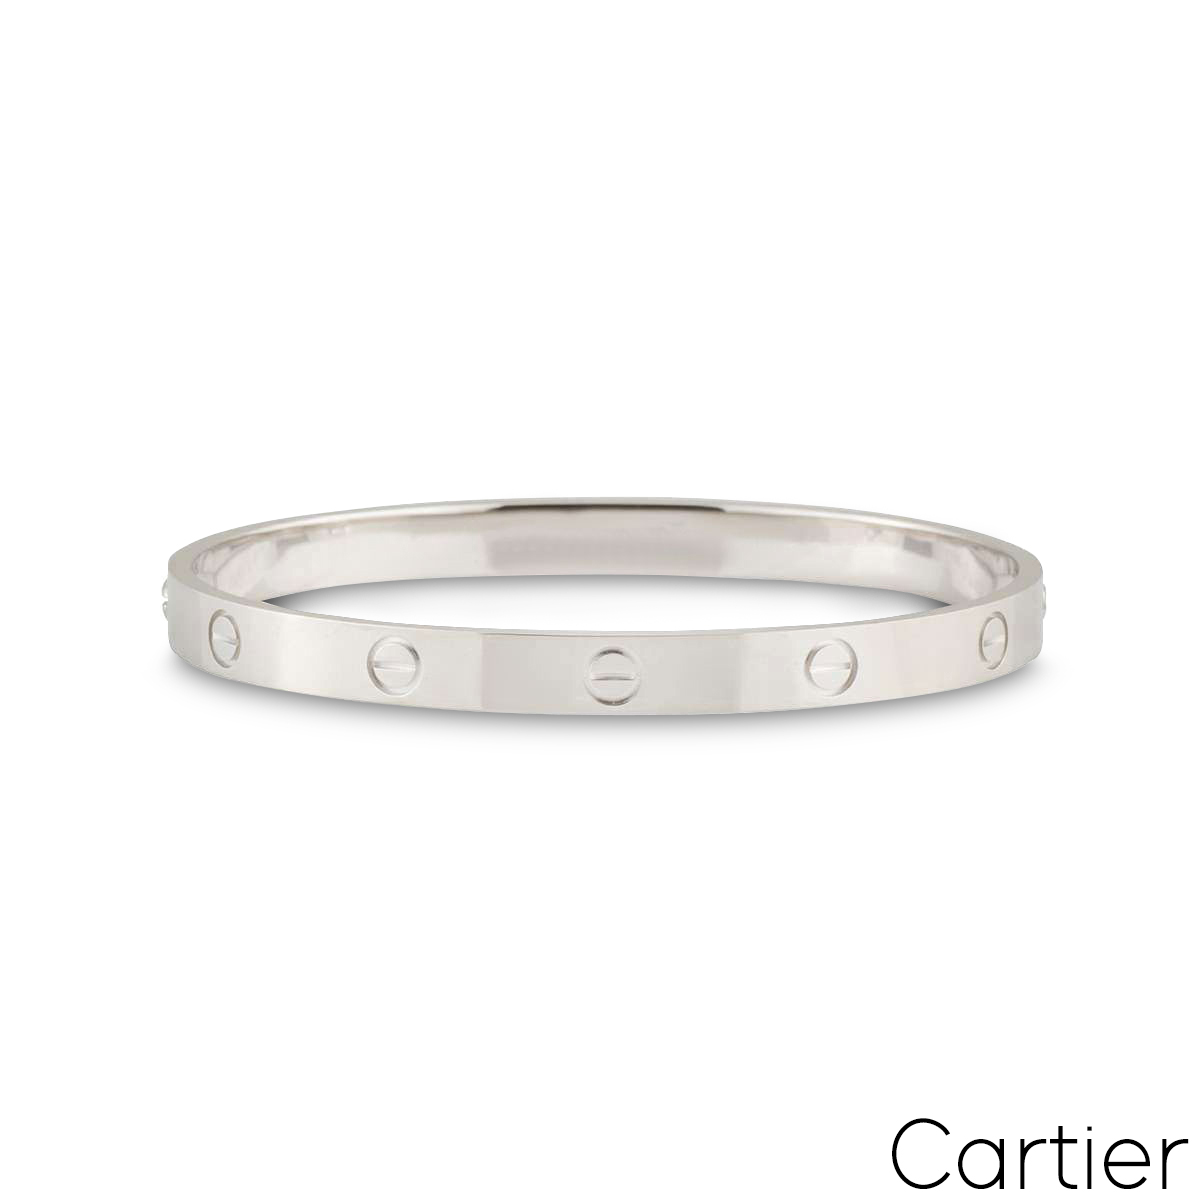 Cartier White Gold Plain Love Bracelet Size 21 B6035421